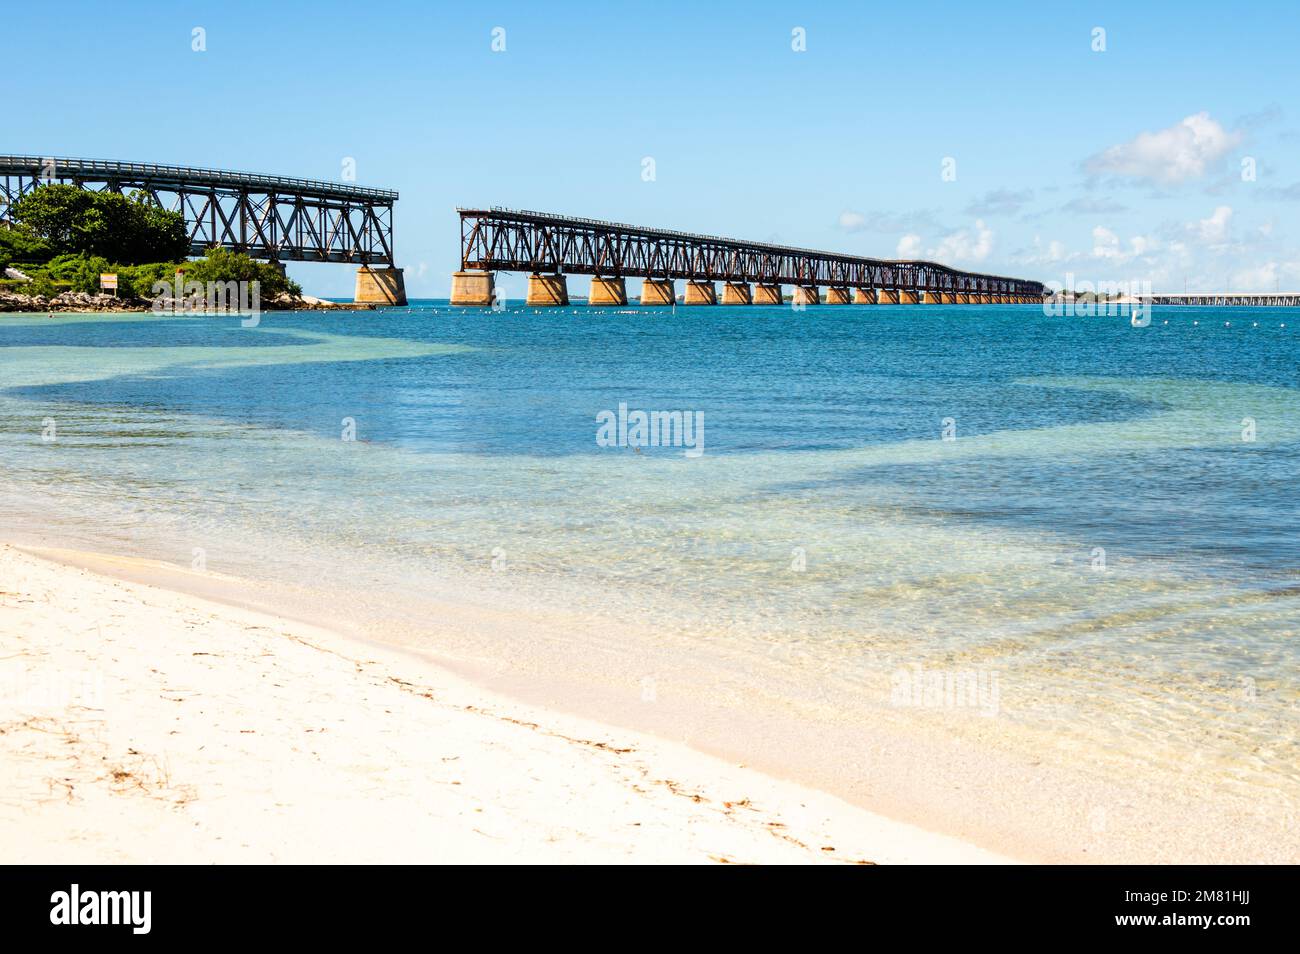 Abandoned Florida Overseas railway bridge over blue ocean water of Gulf of Mexico, Calusa beach in Florida Keys, Bahia Honda State Park, Stock Photo